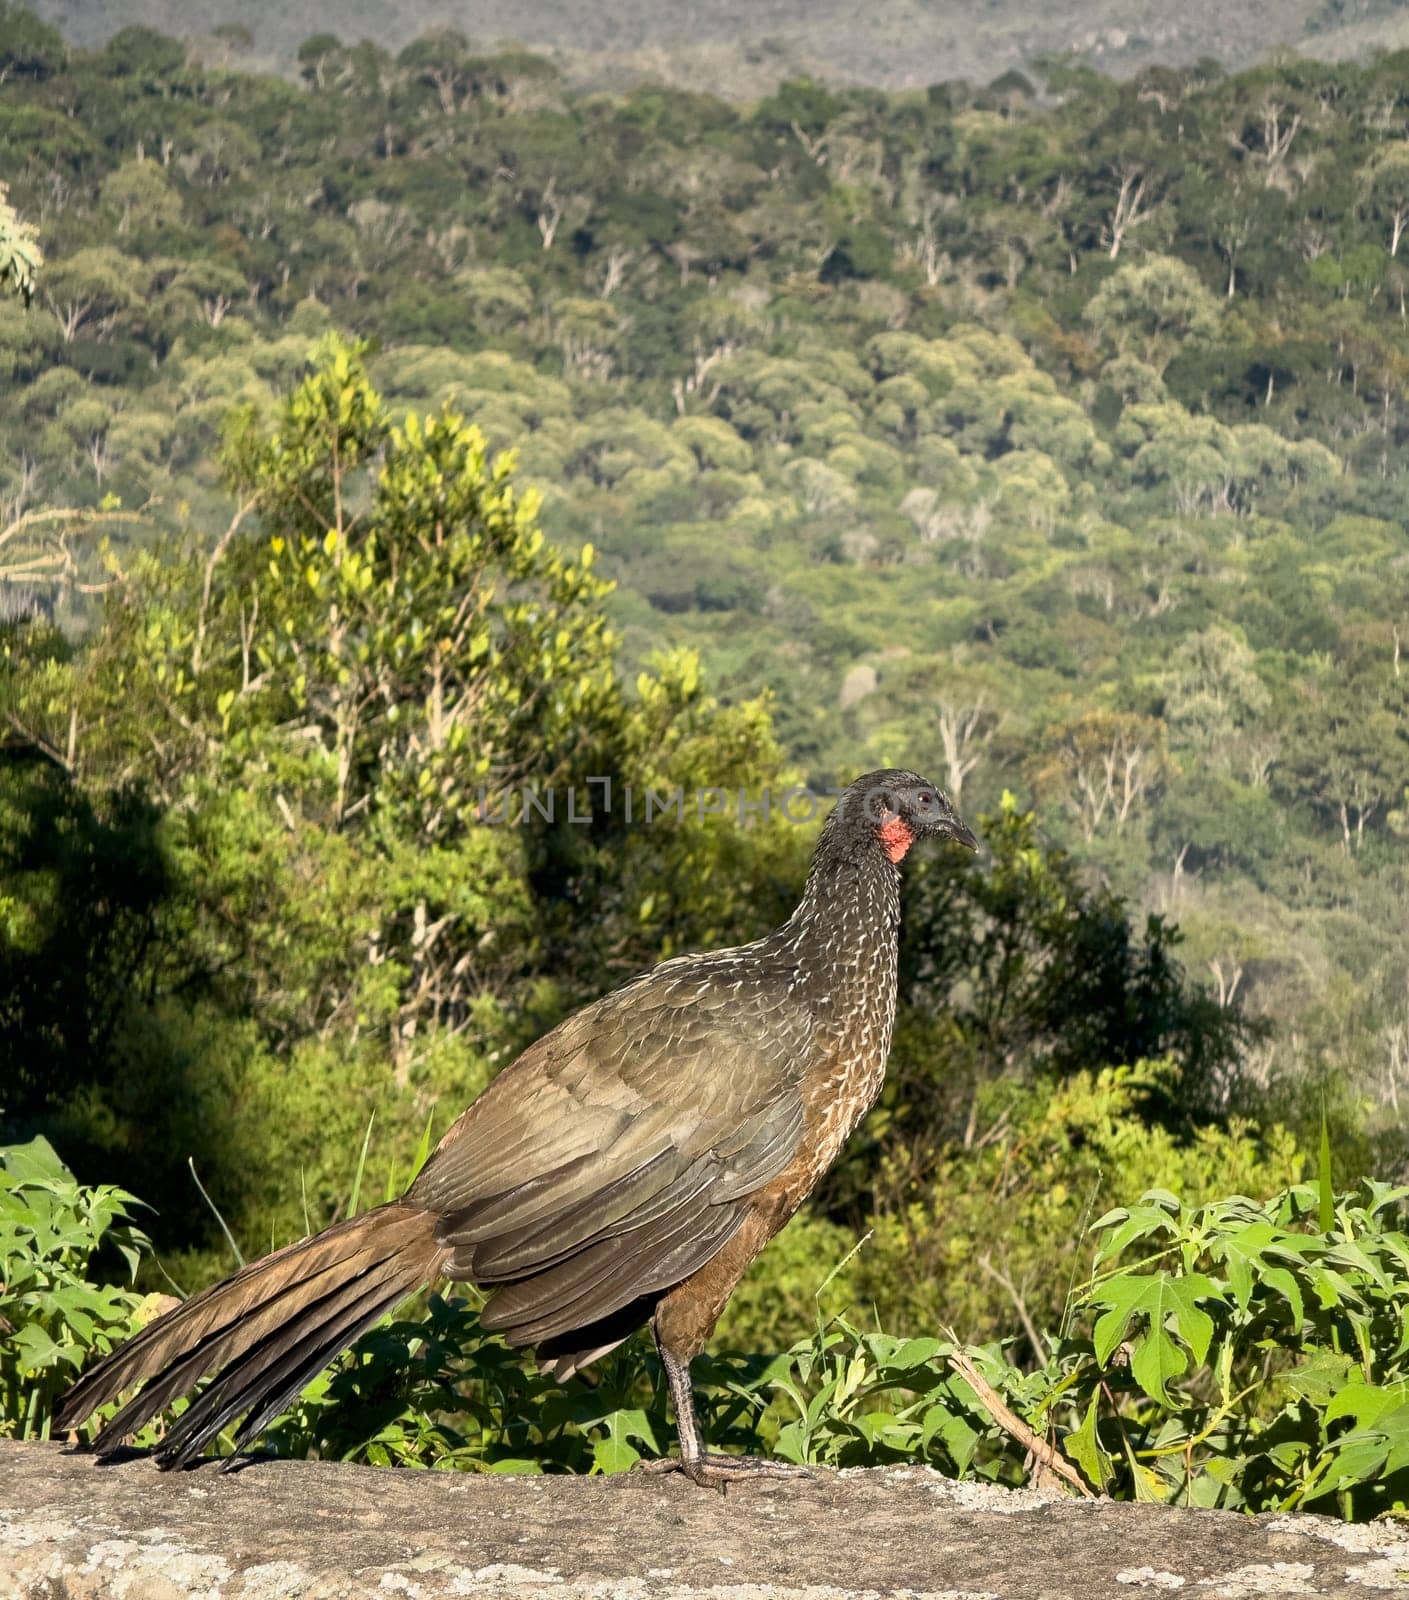 Majestic wild jacu bird standing against a lush forest backdrop by FerradalFCG